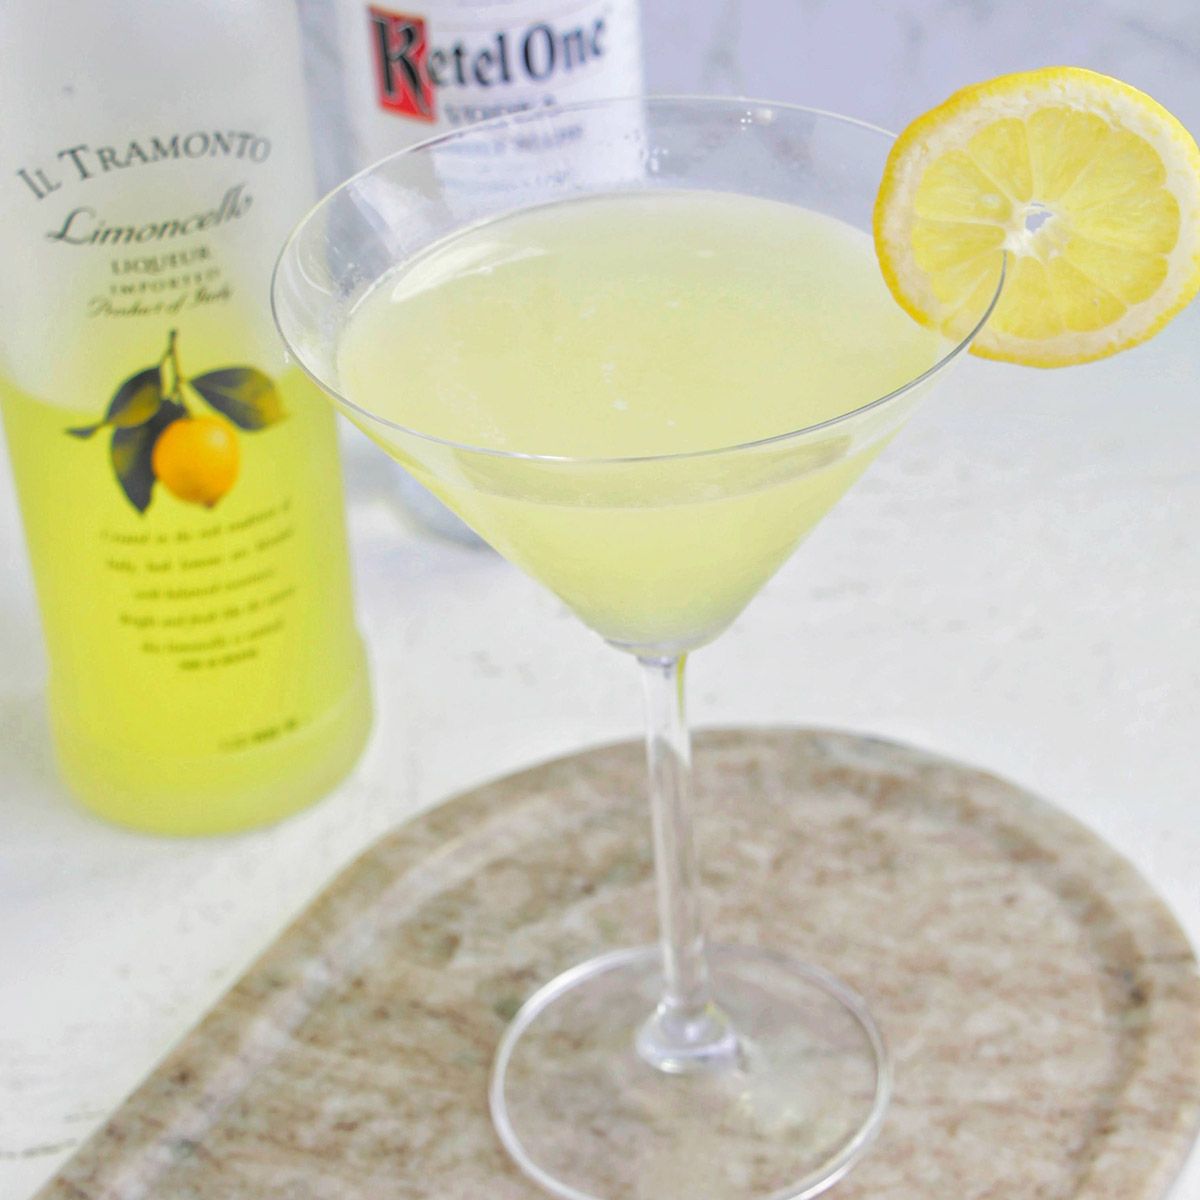 Limoncello Lemon Drop Martini (4 Ingredients)